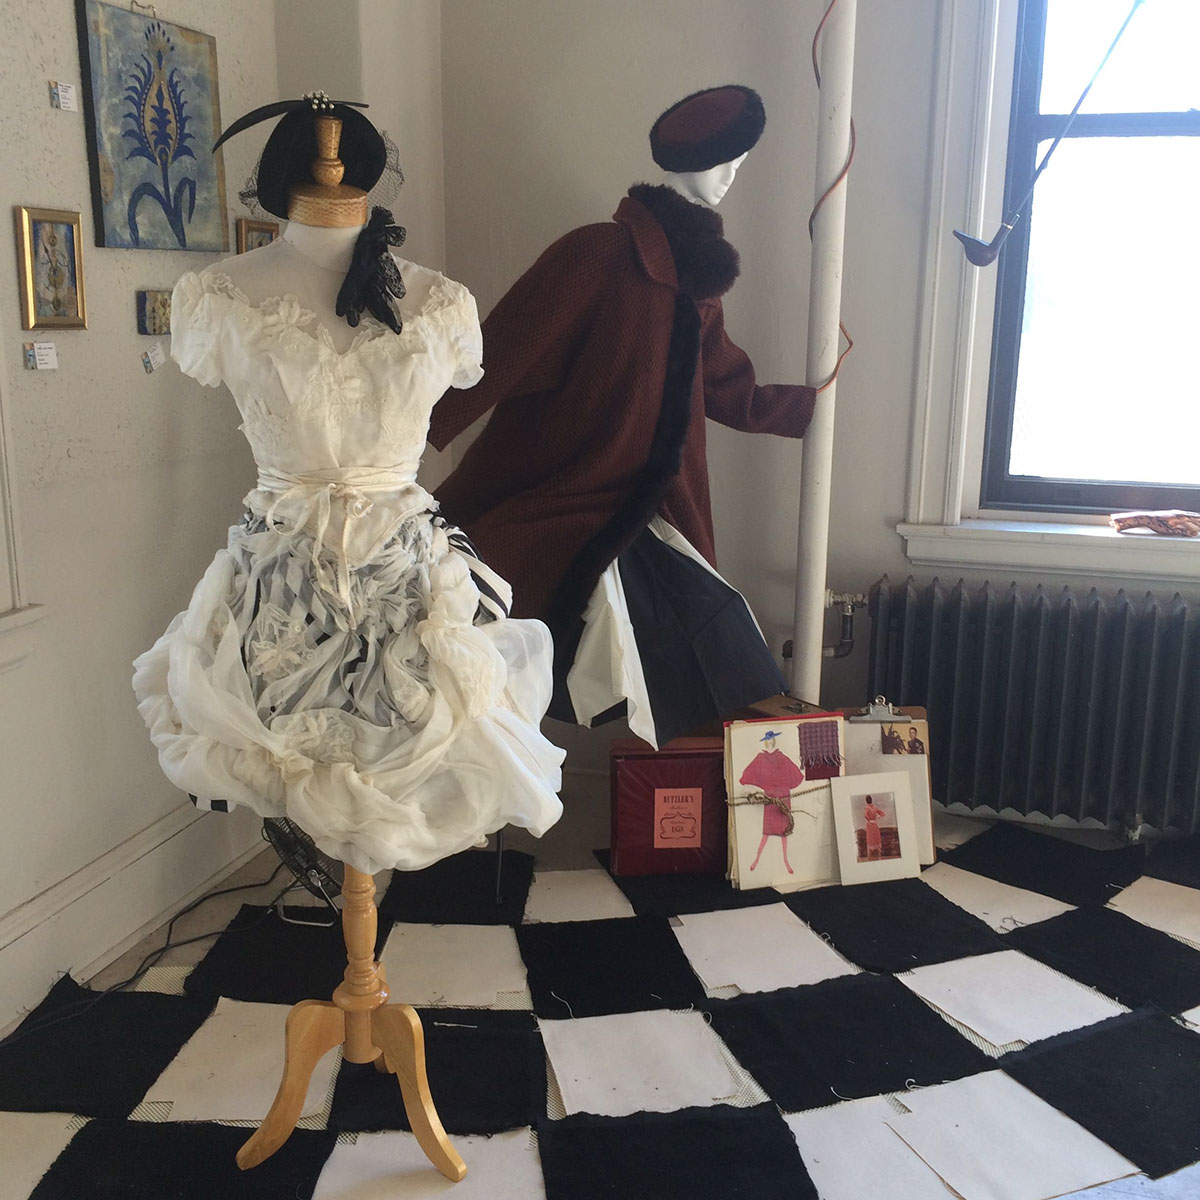 Baltimore Fashion  Renaissance vitruvian Duchess of Windsor garment industry local mystery revival surreal surrealism installation